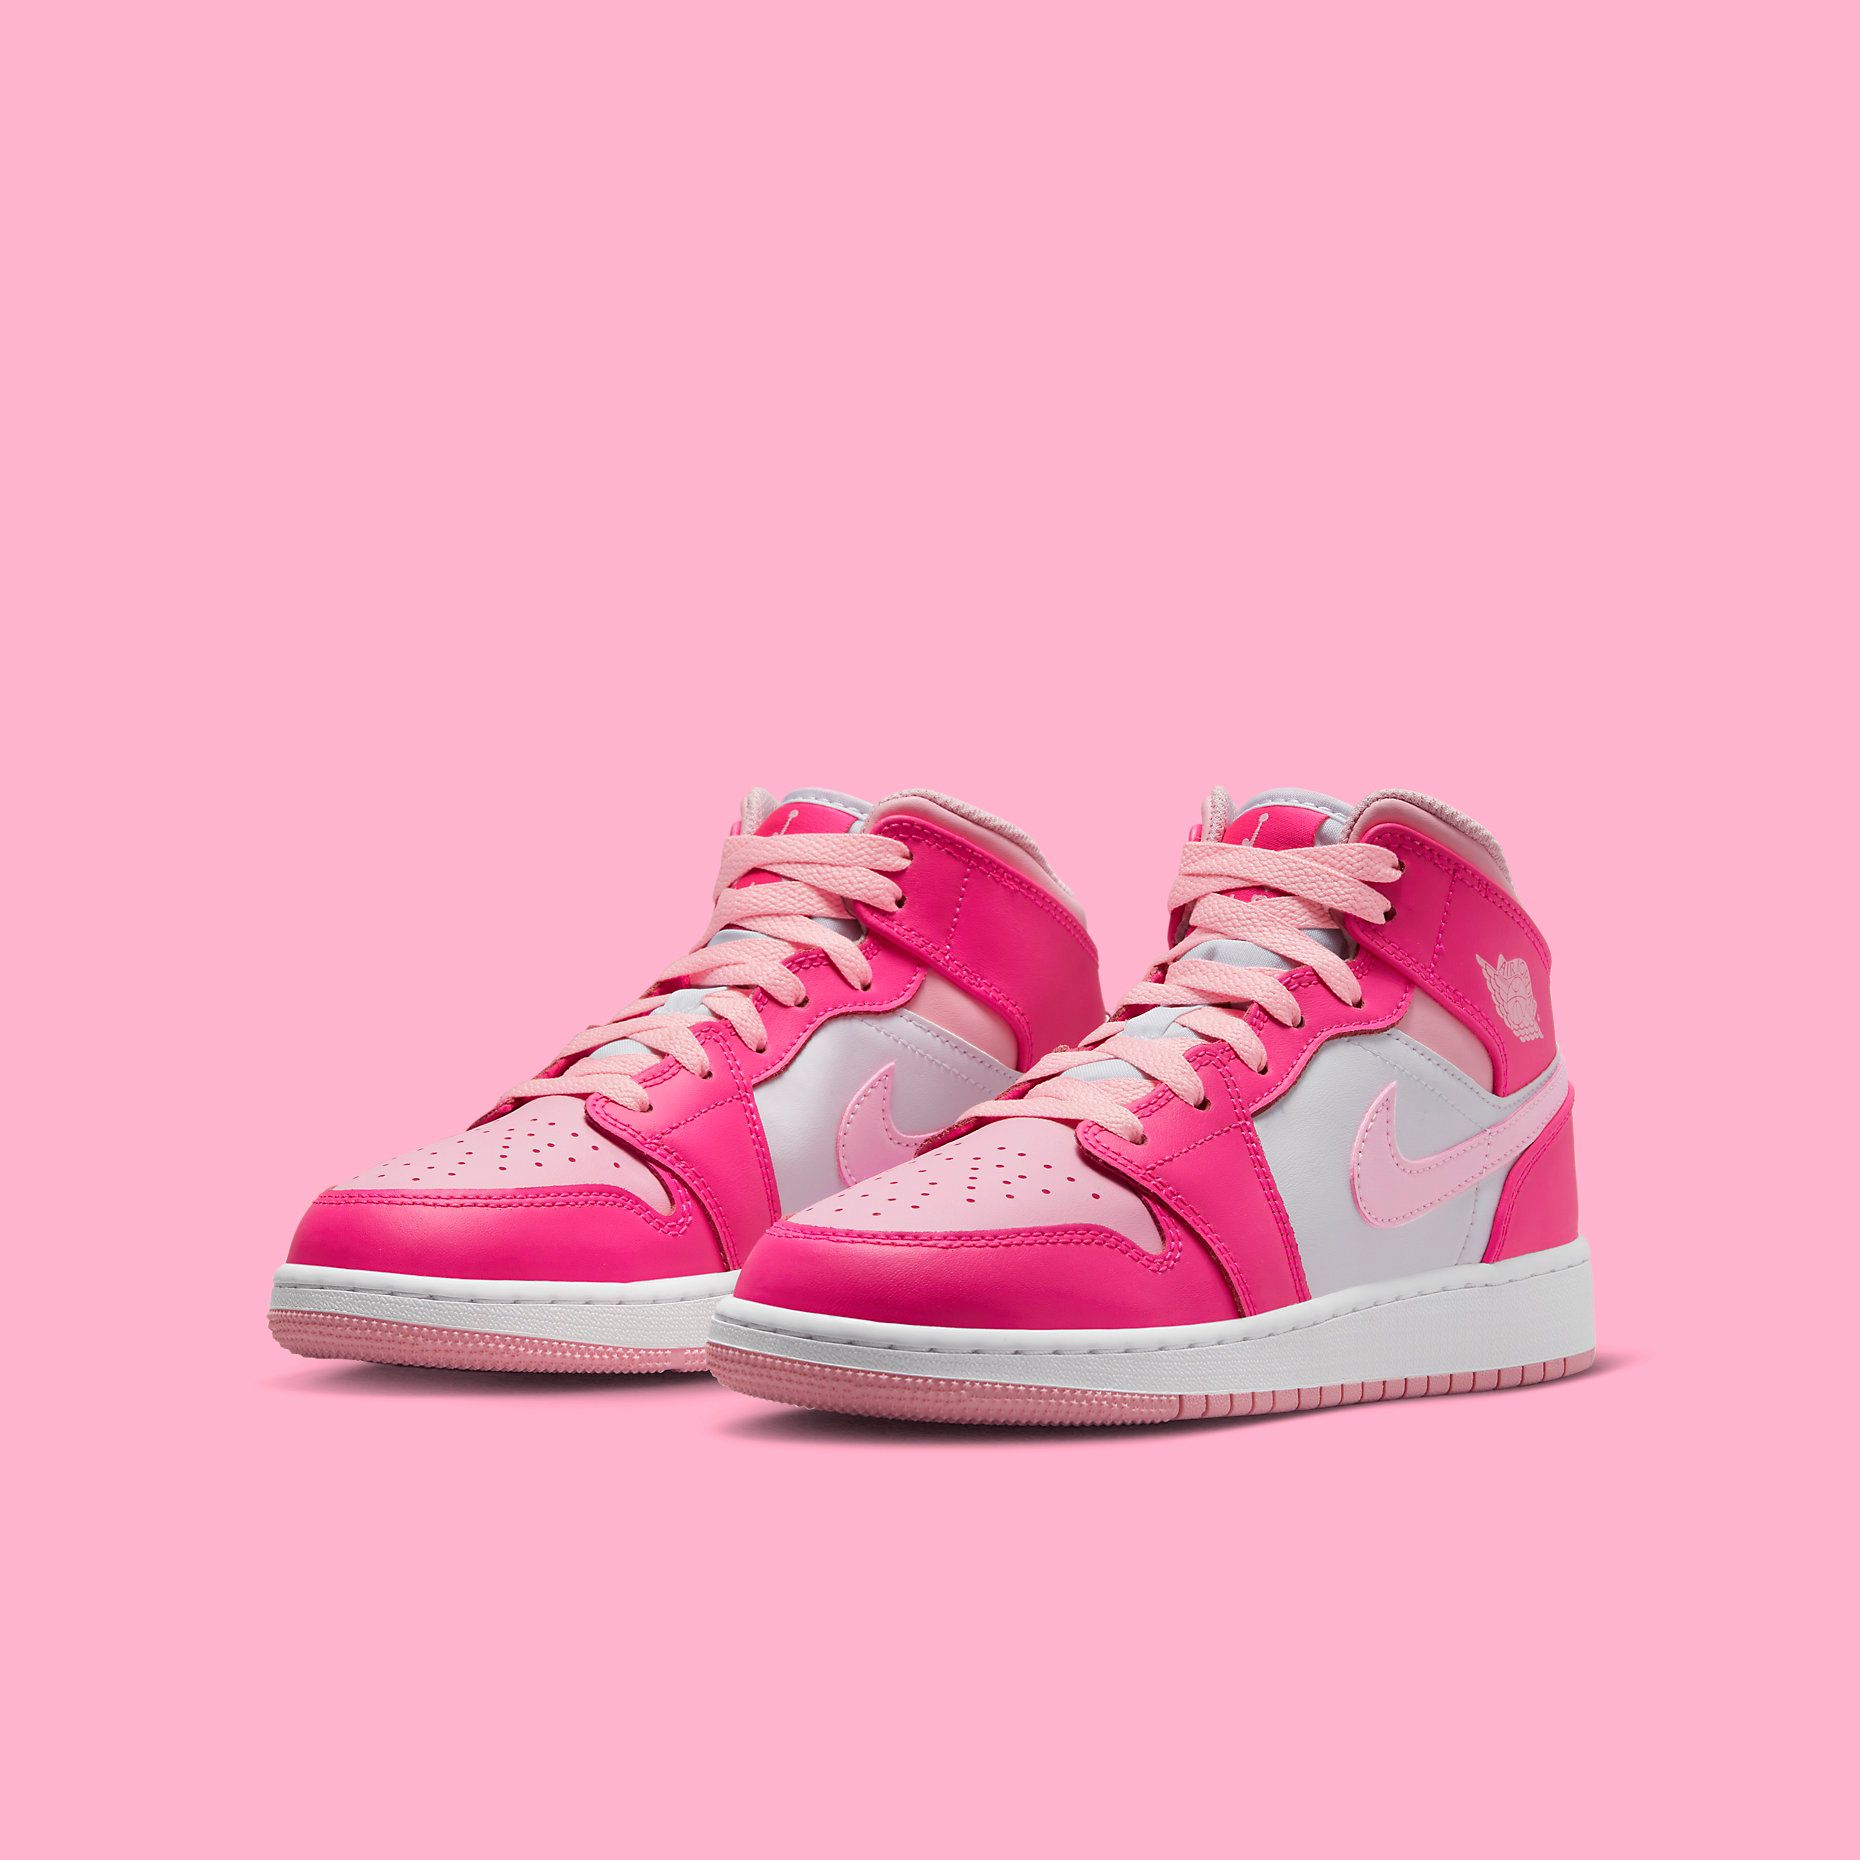 Official Images // Air Jordan 1 Mid “Medium Soft Pink” | House of Heat°